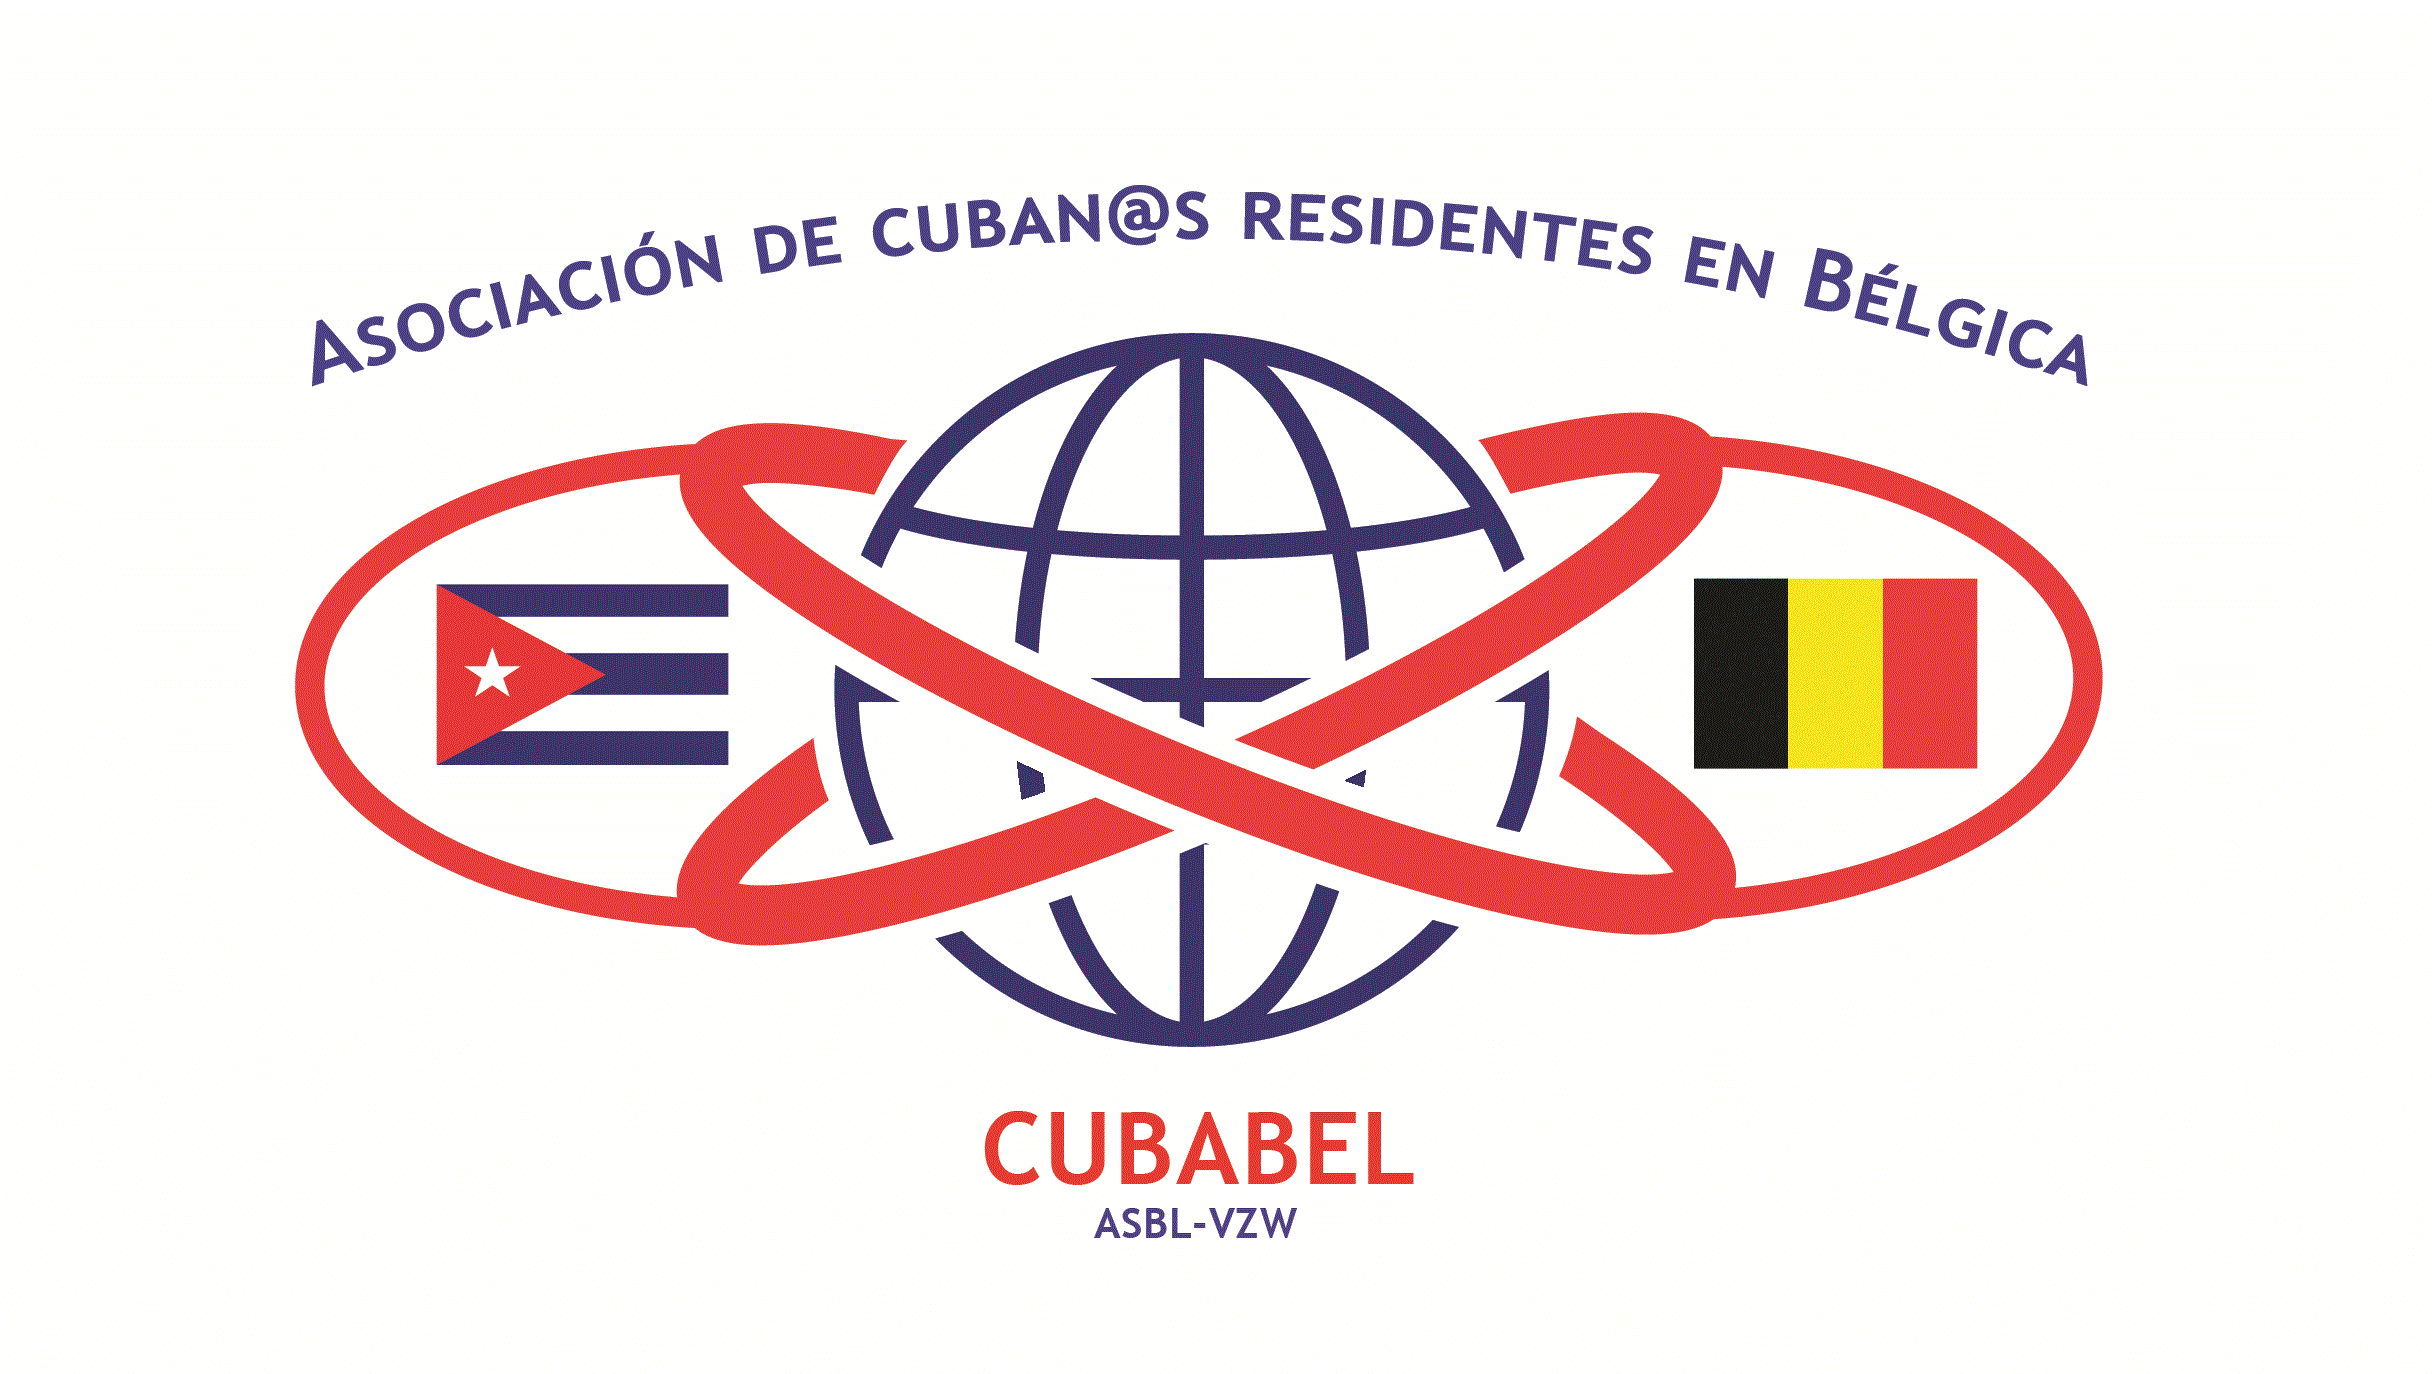 Asoc.Cubanos residentes en Belgica